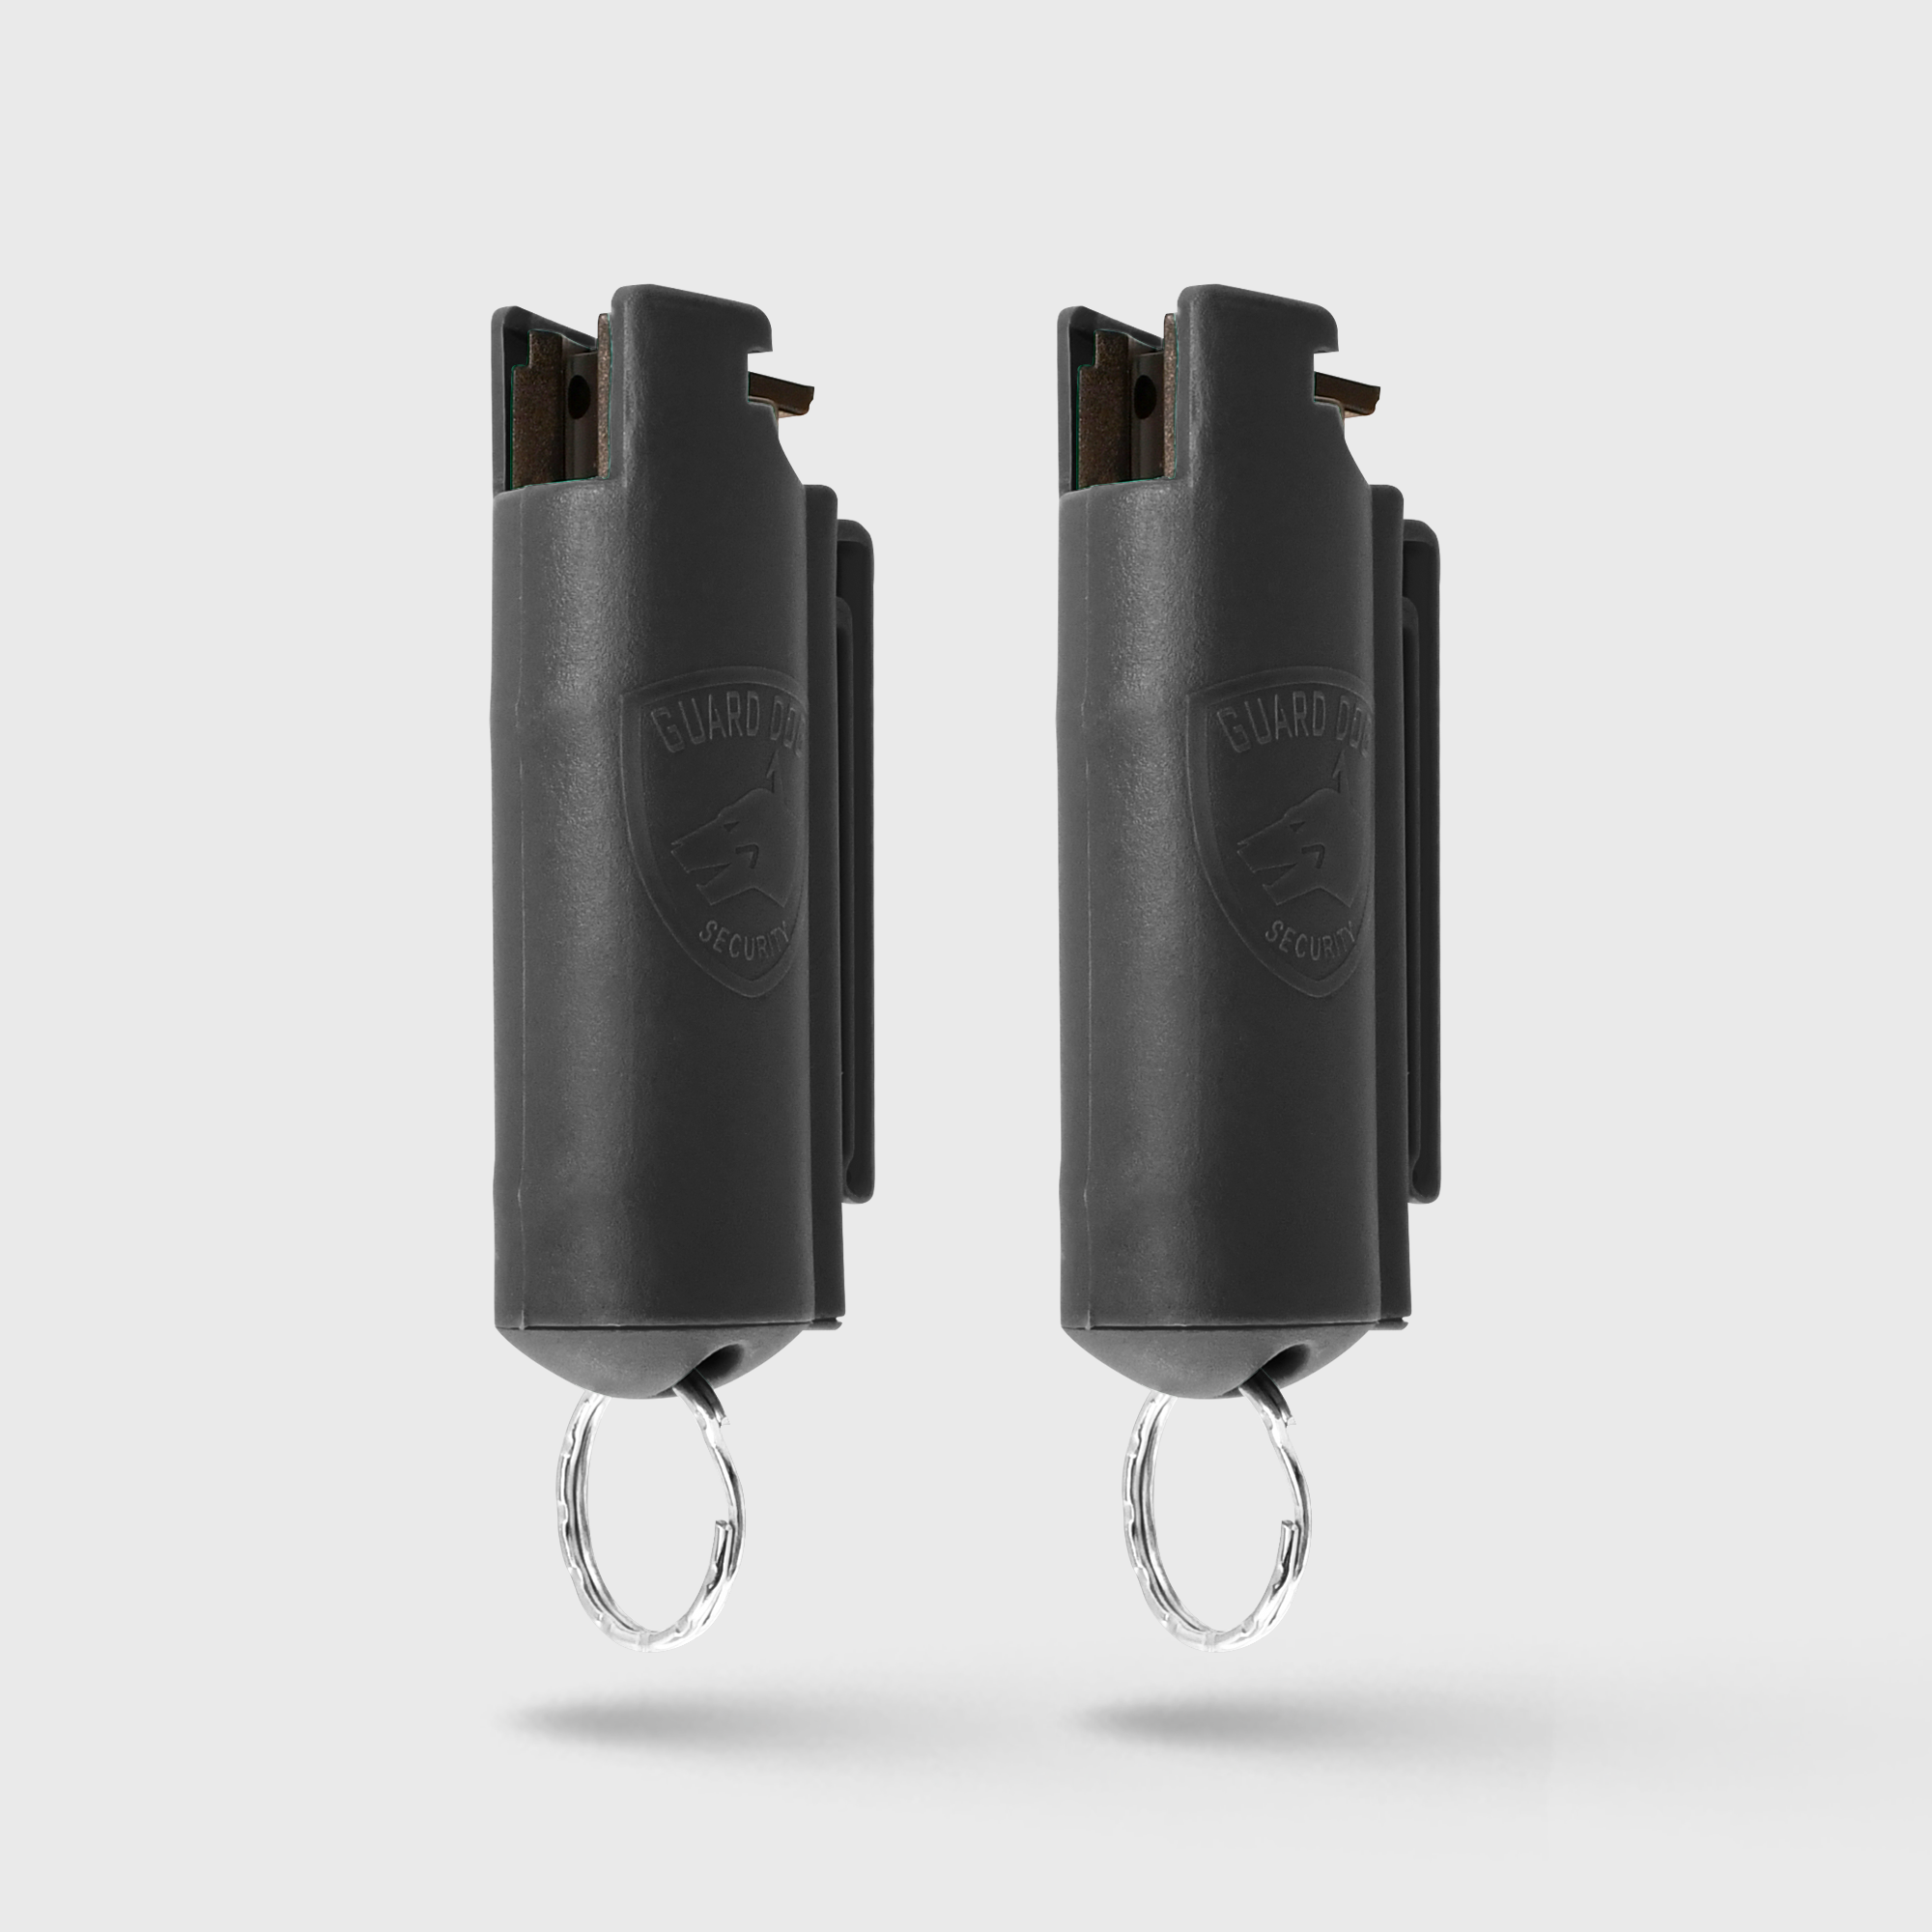 Buy Pepper Spray Hard Case online, 0.5 oz w/ Keychain 2 Pack